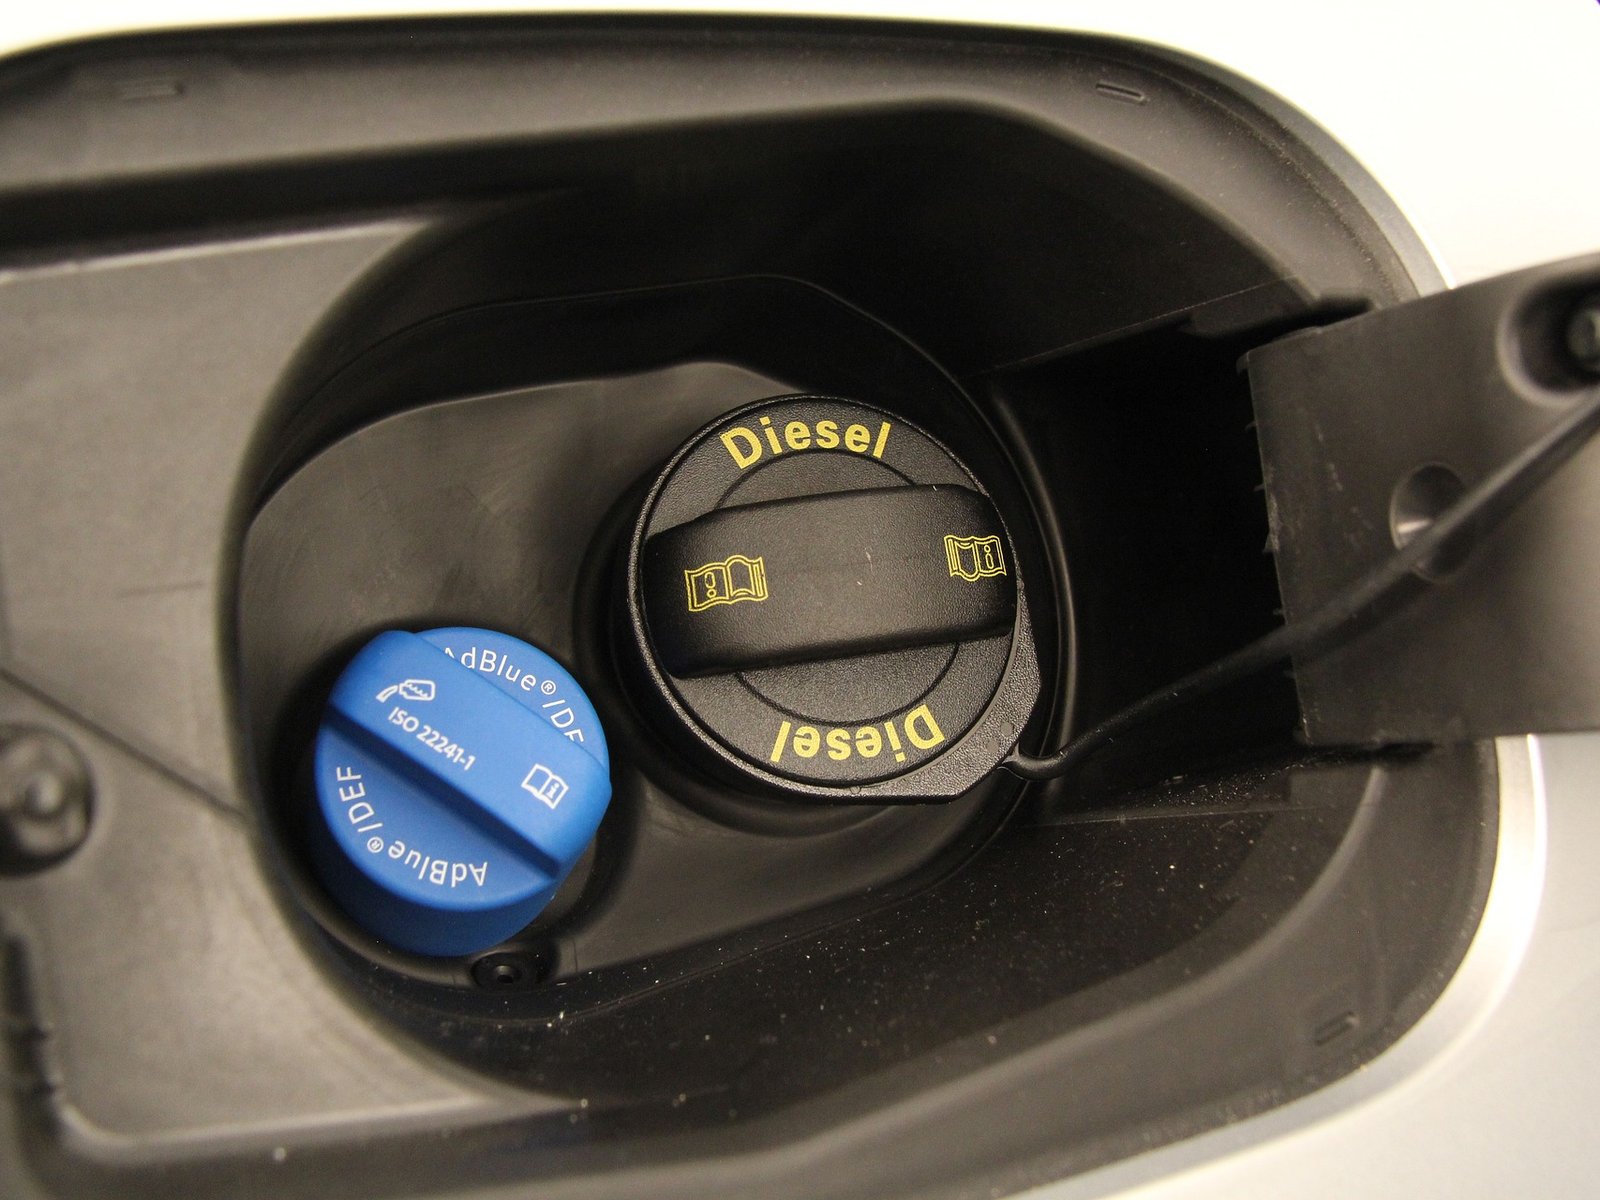 20 Liter für Diesel Kanister Harnstofflösung gemäß ISO 22241/1 DIN